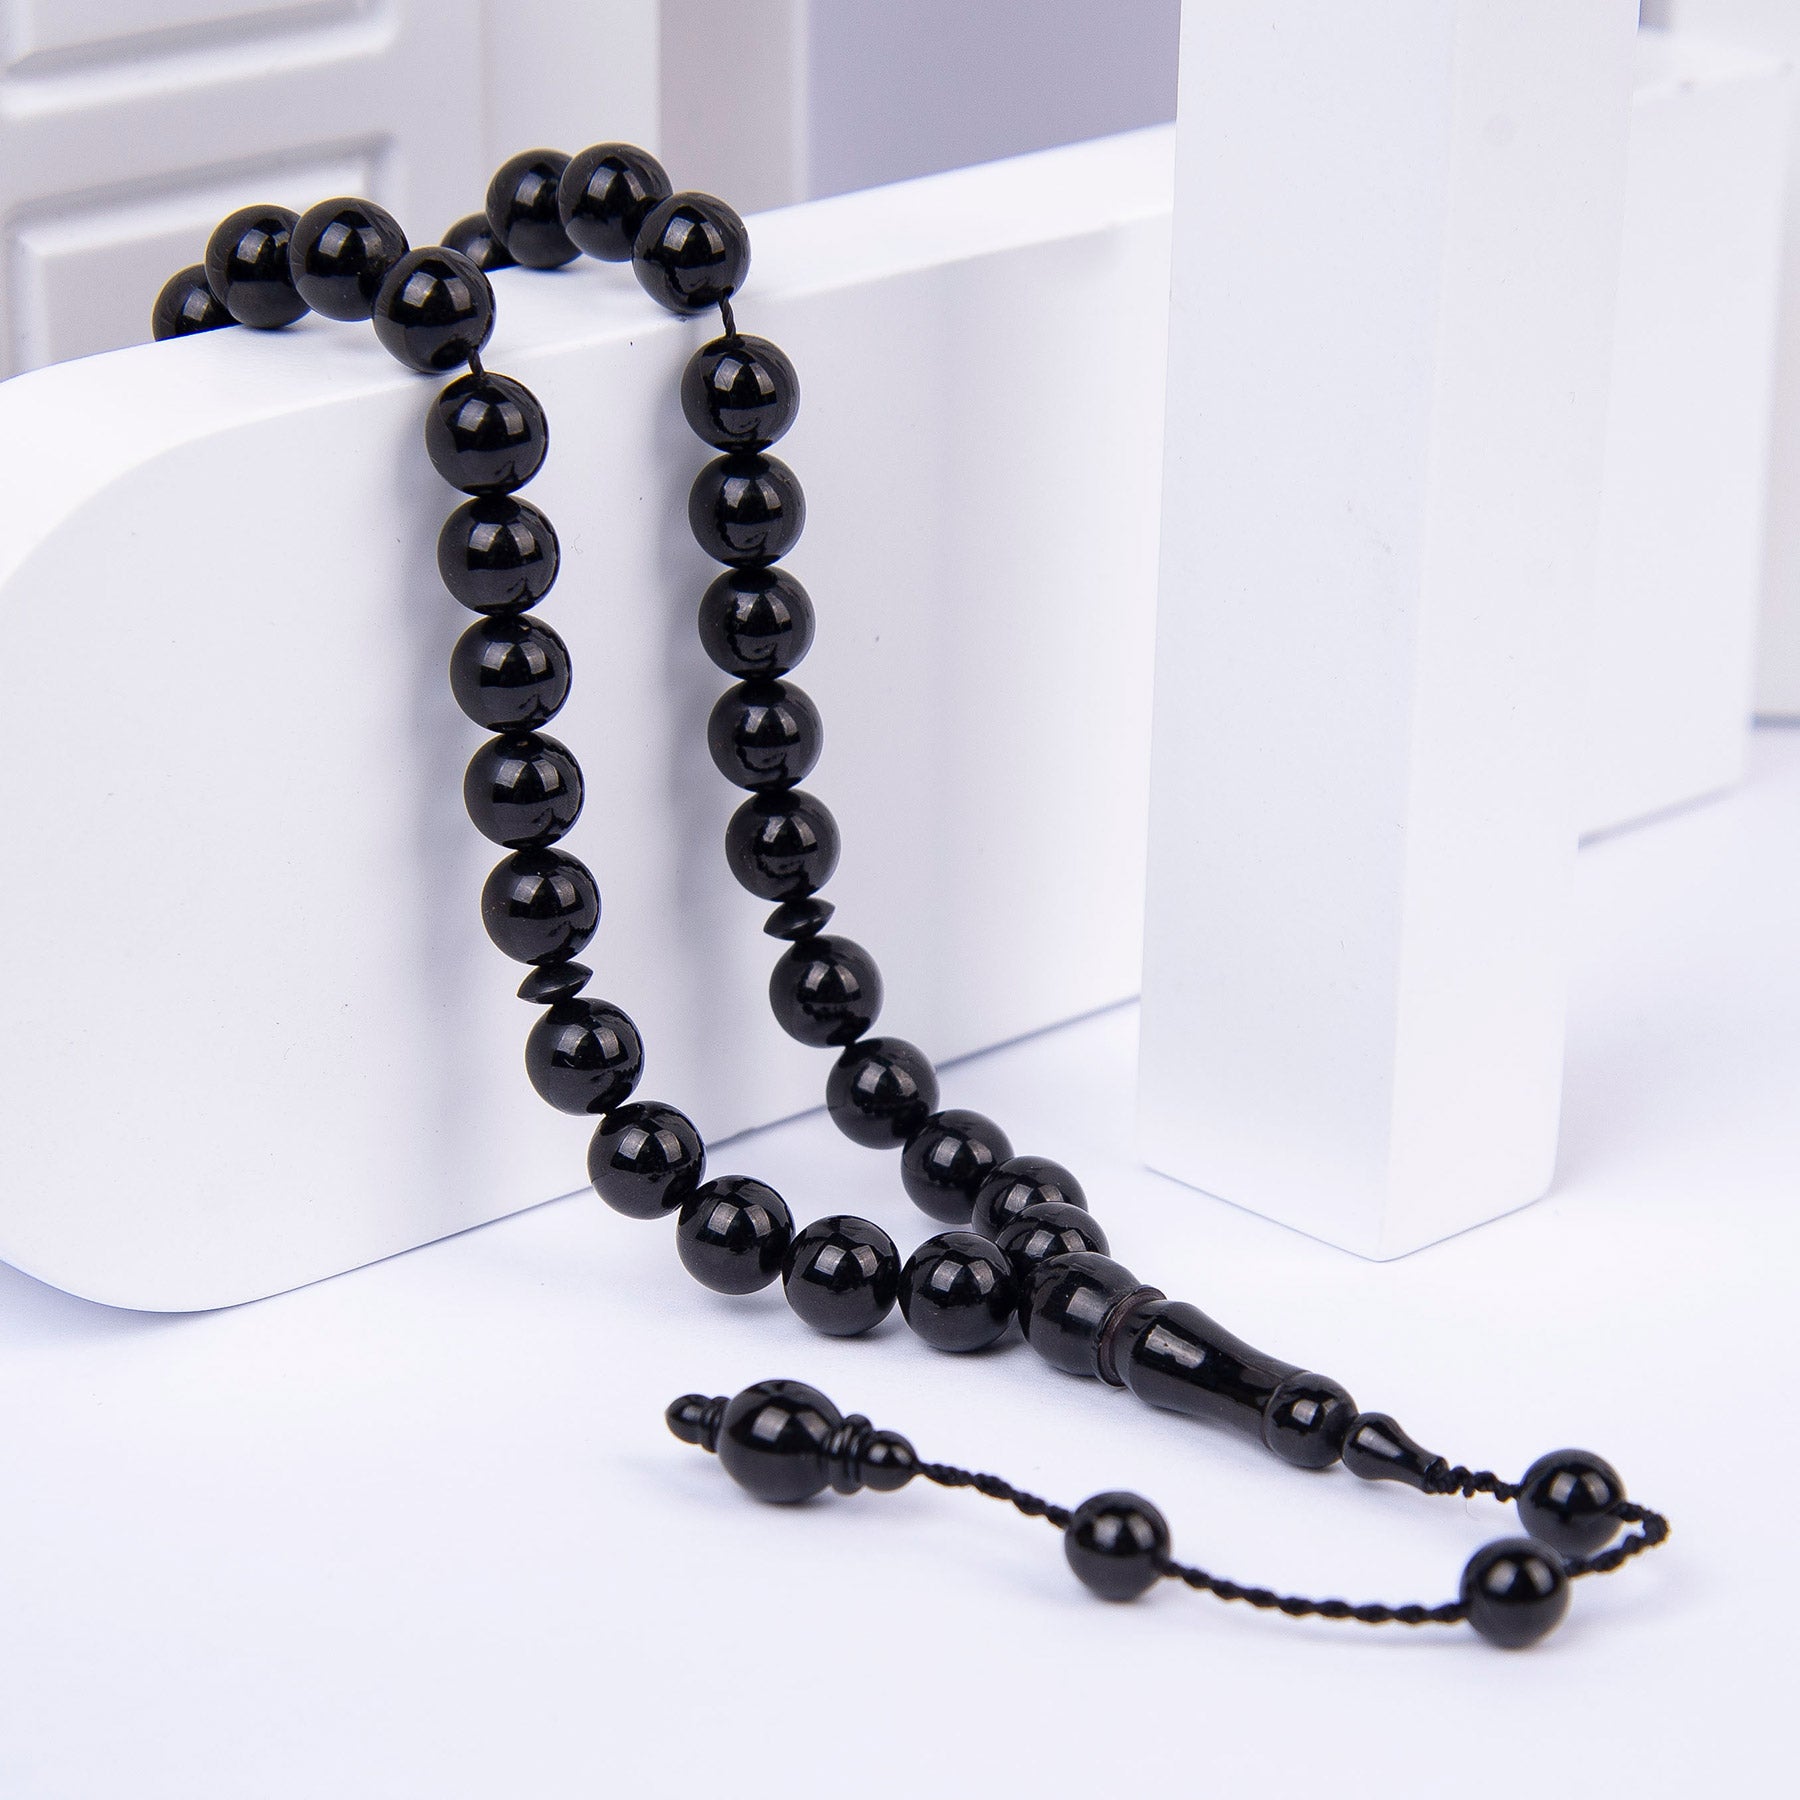 Ve Tesbih Oltu Stone Prayer Beads with Sphere Cutting System 1